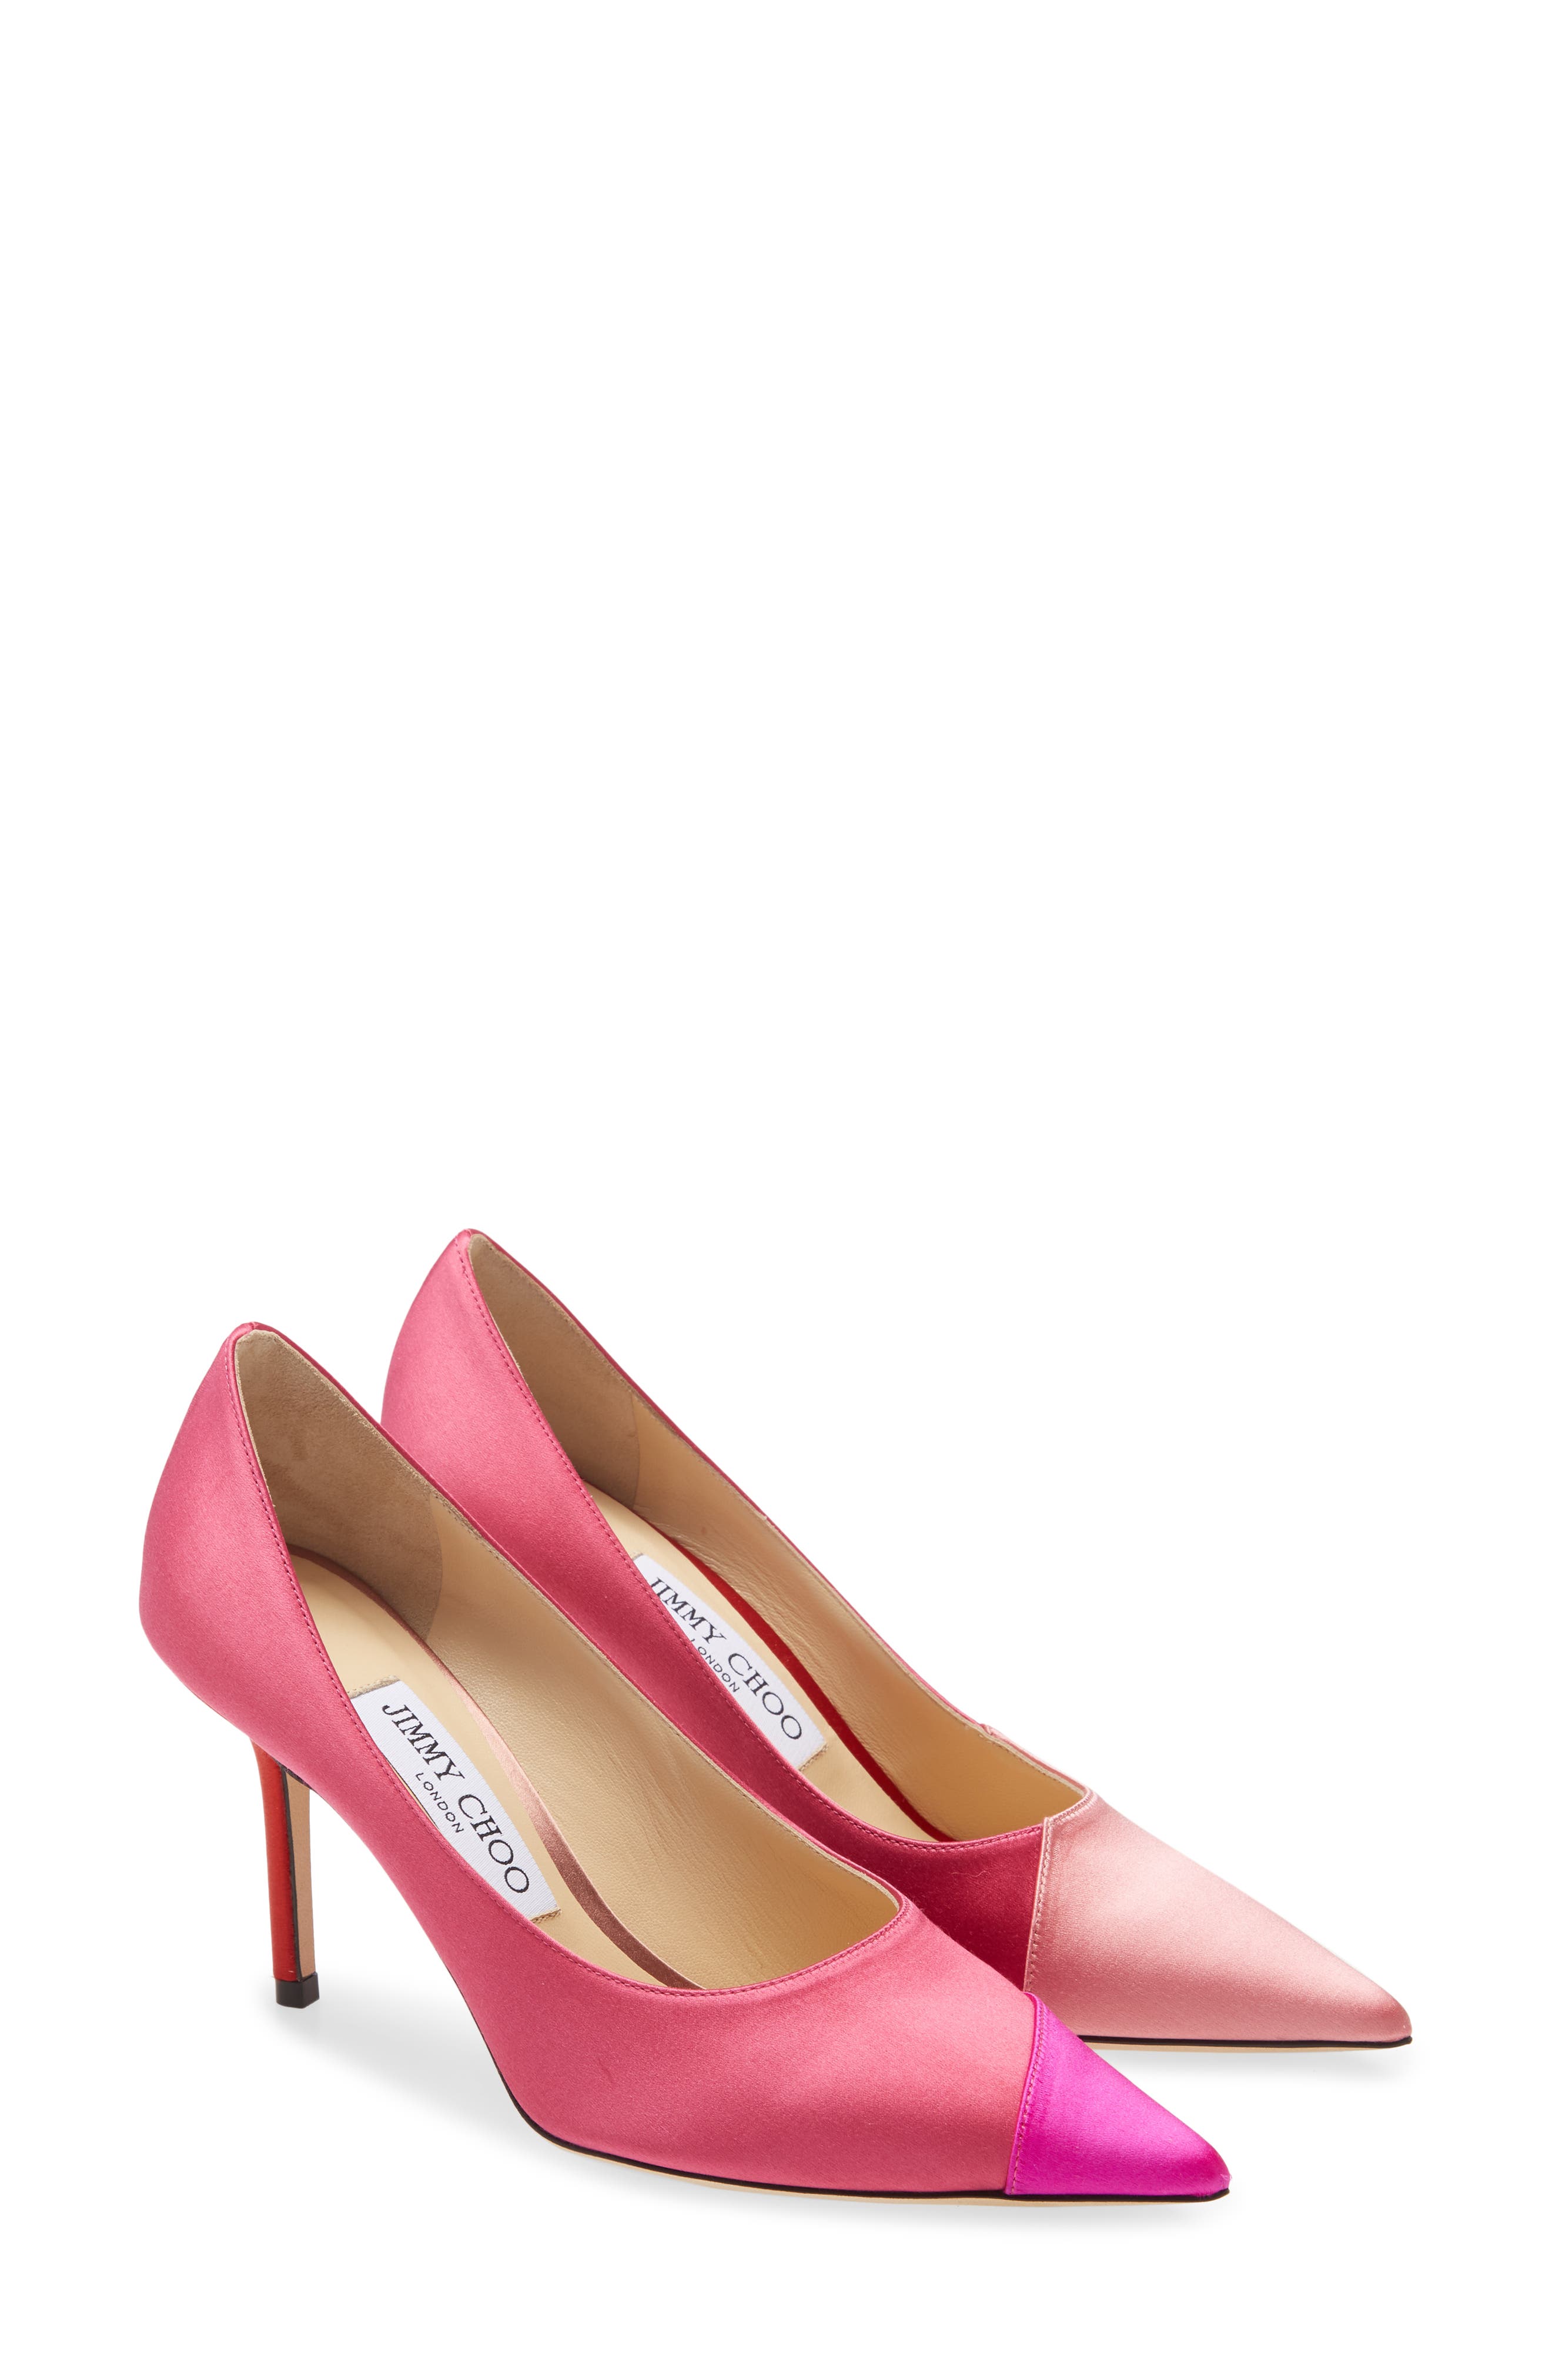 jimmy choo hot pink heels